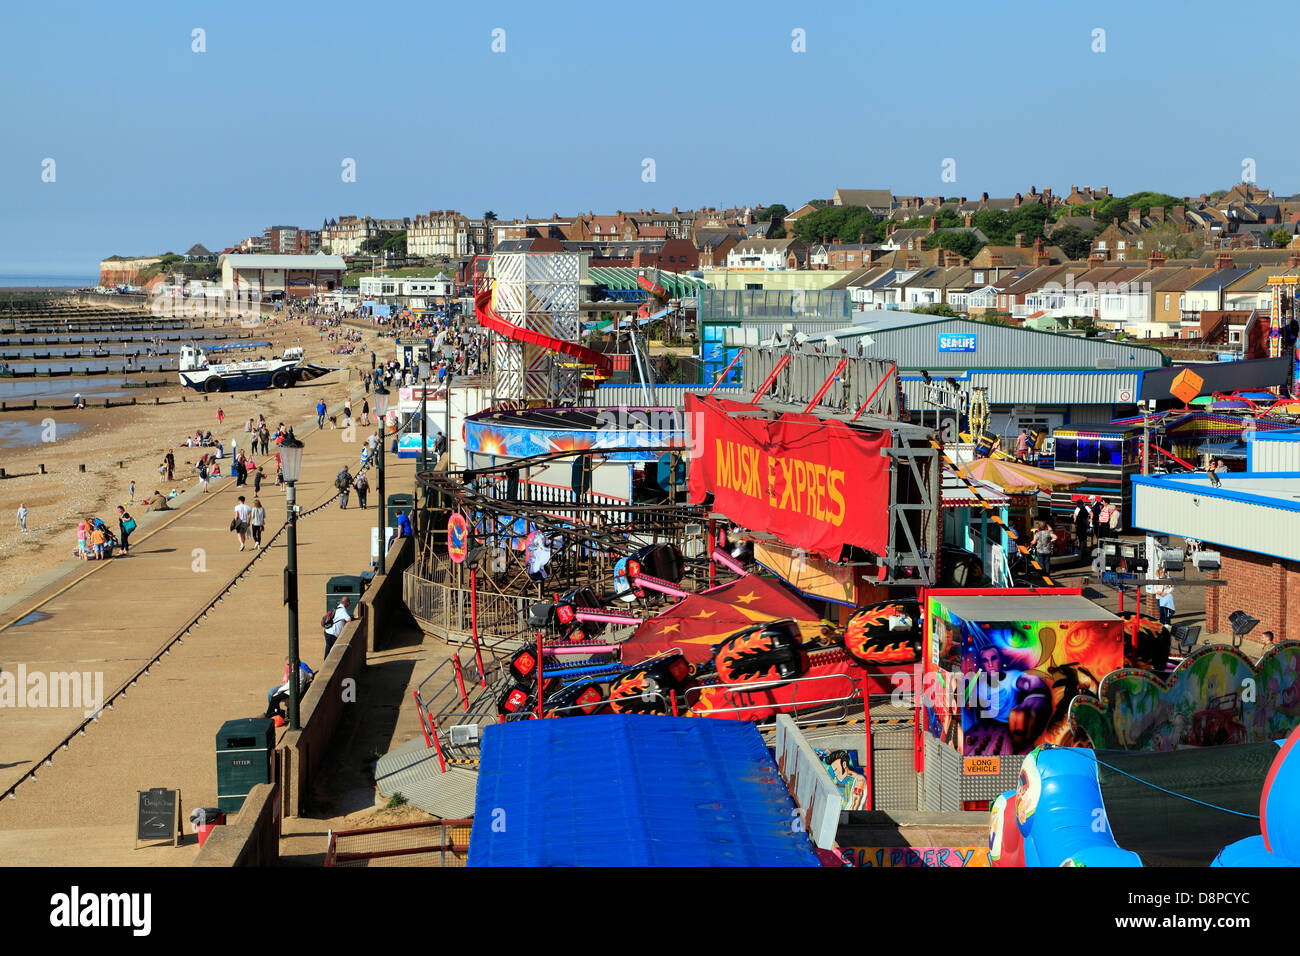 Hunstanton, Norfolk, Funfair, Beach, Town, Fairground, England UK seaside resort resorts English Stock Photo